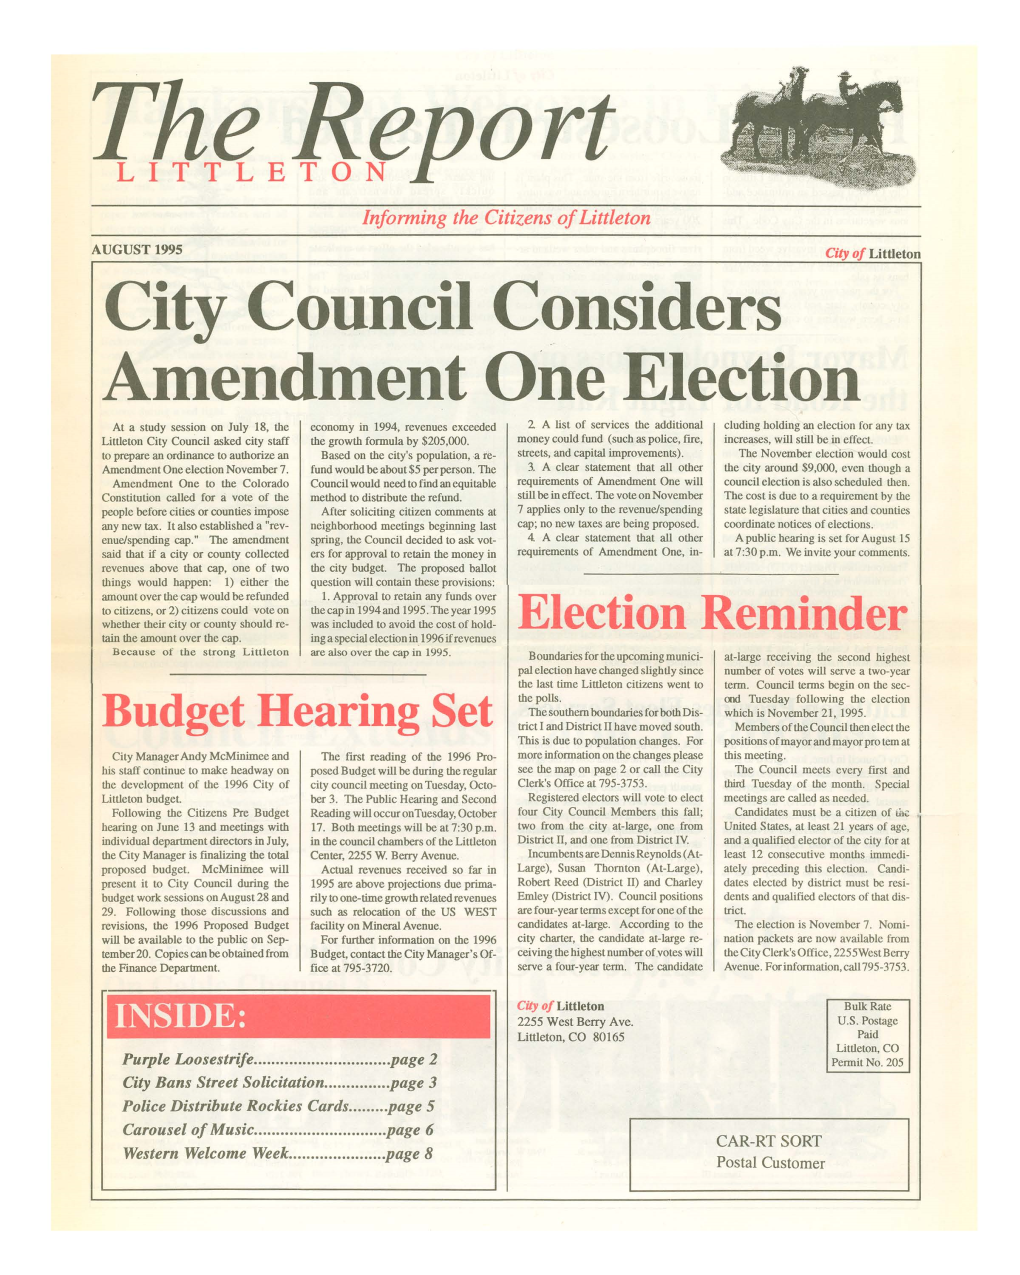 City Council Considers Amendment One Election